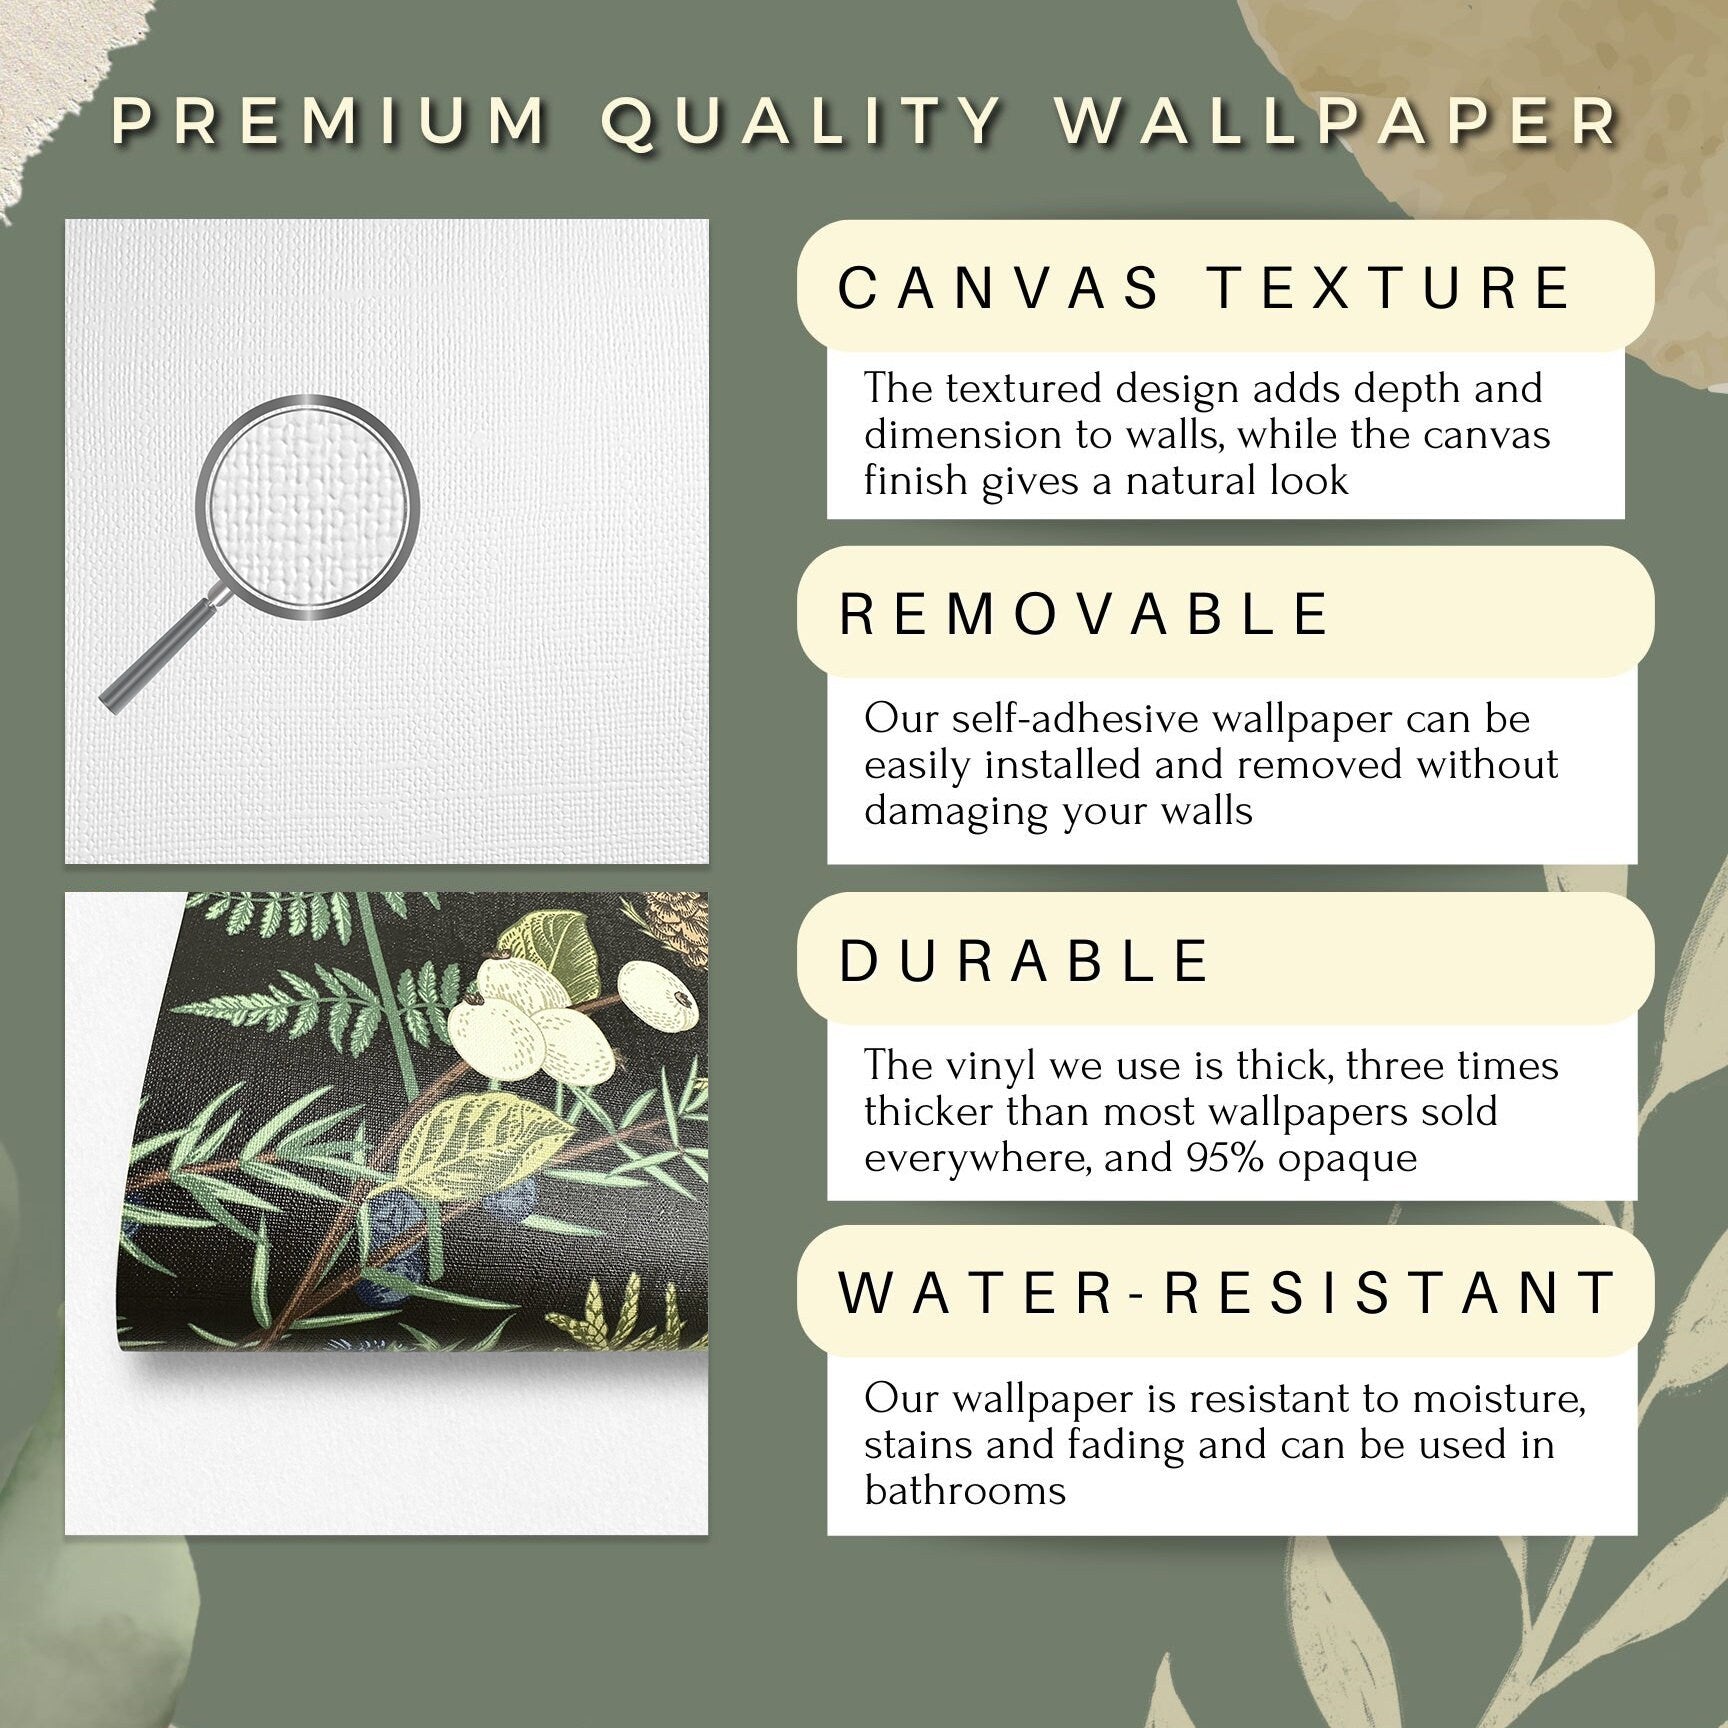 Hummingbird Wallpaper, Citrus Wallpaper, Dark Floral Wallpaper Peel and Stick, Lemon Wallpaper, Removable Wall Paper